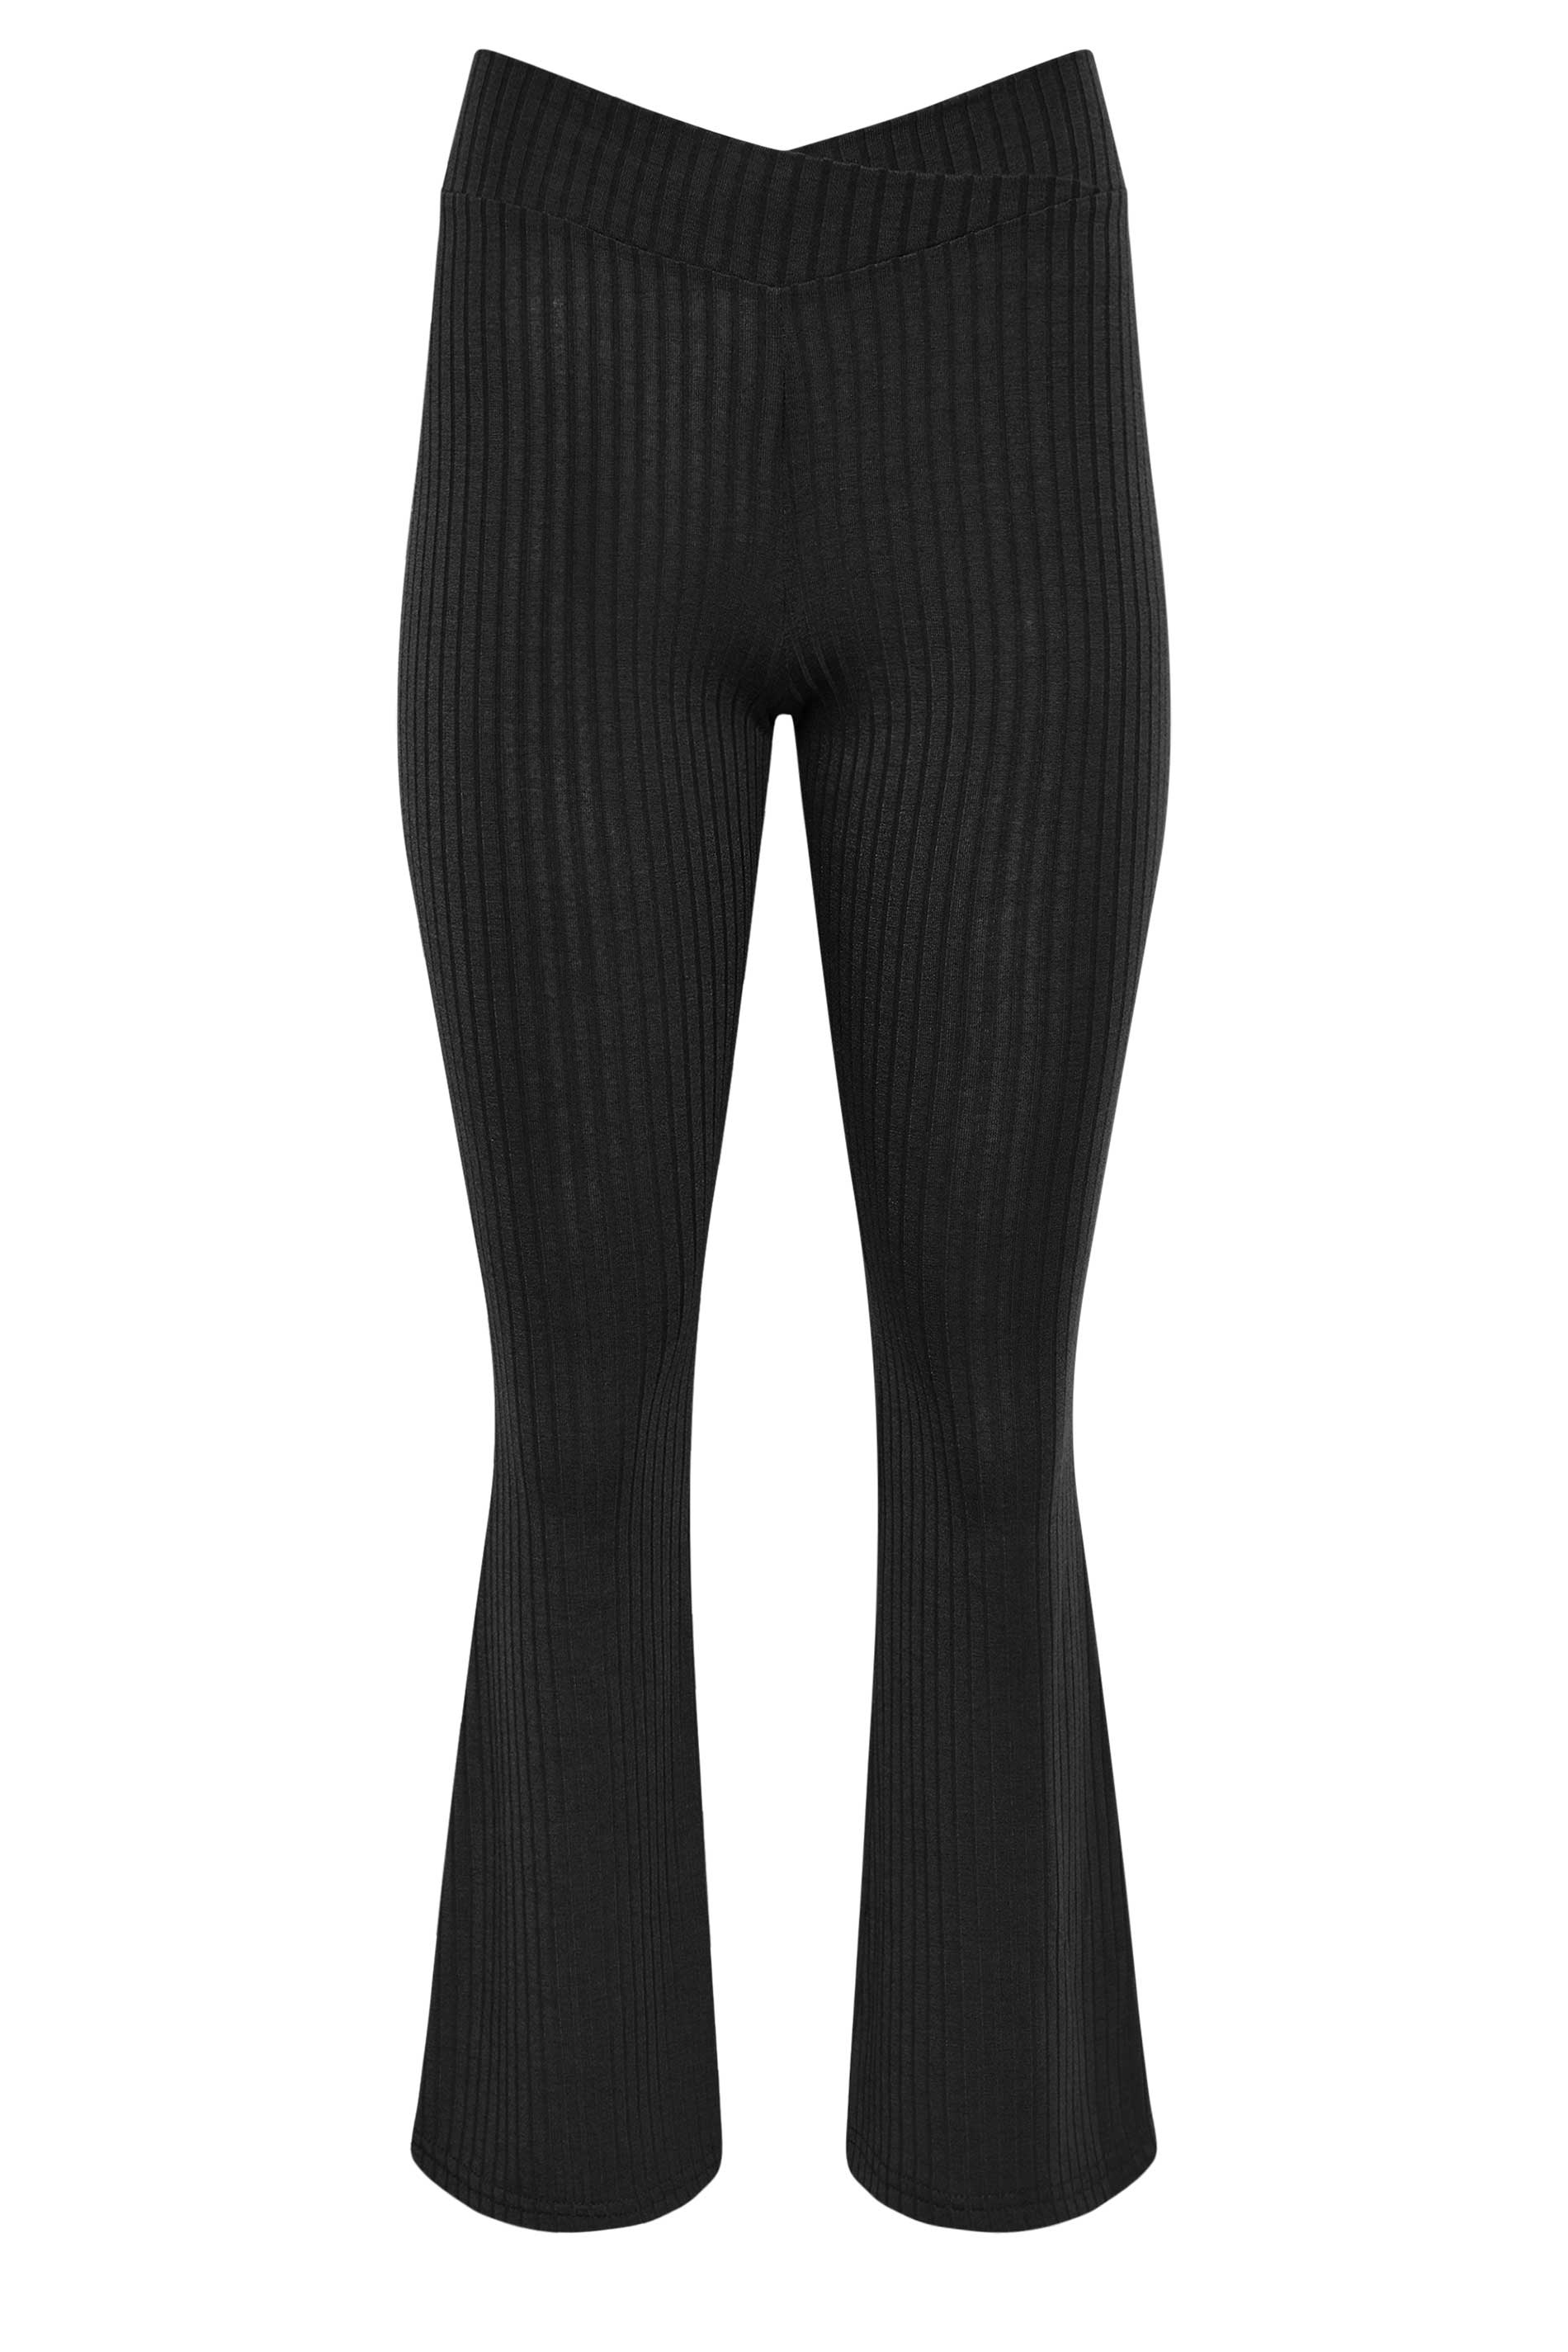 PixieGirl Black V-Waist Ribbed Flare Trousers | PixieGirl